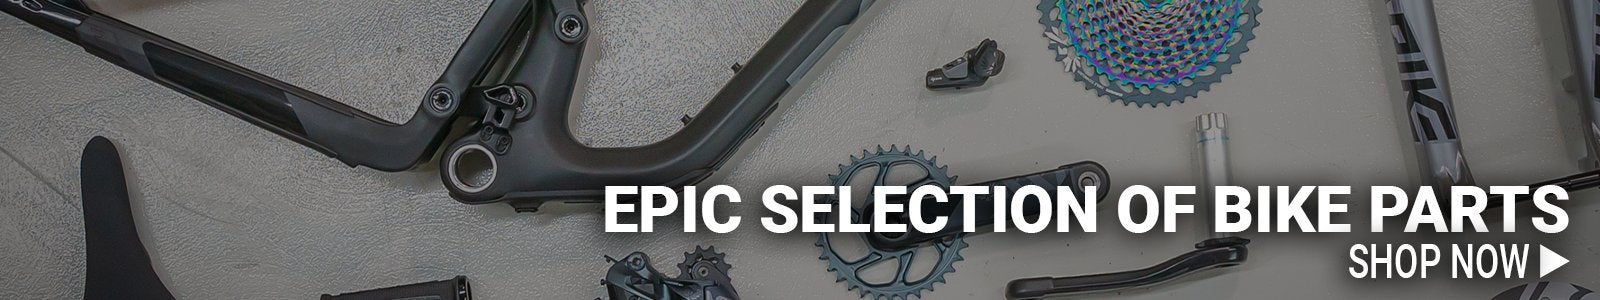 Slideshow - Epic Selection of Bike Parts